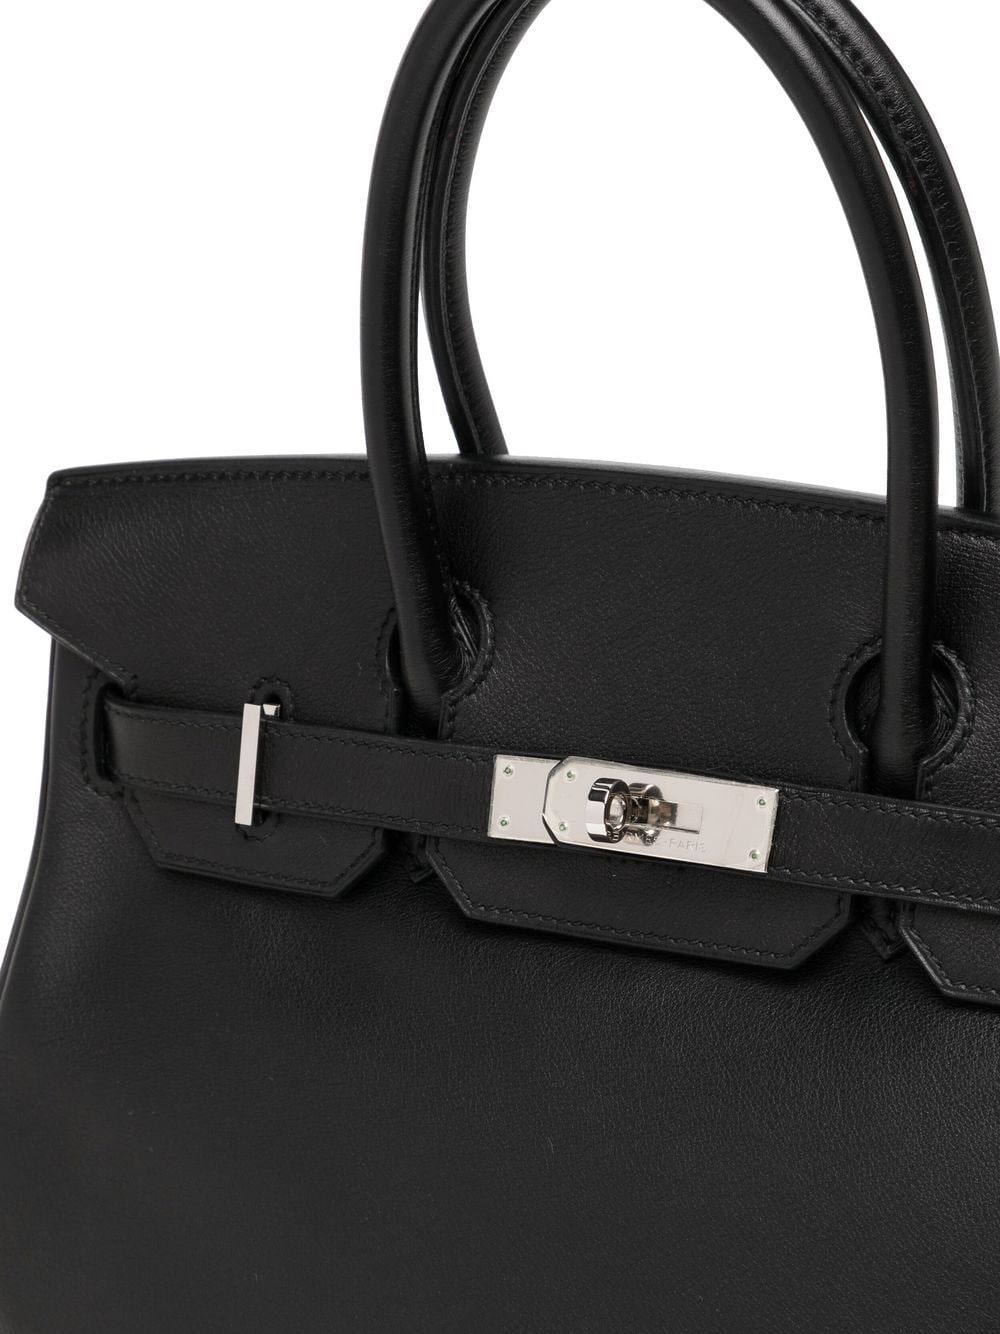 Hermès 2009 Pre-owned Birkin 30 Bag